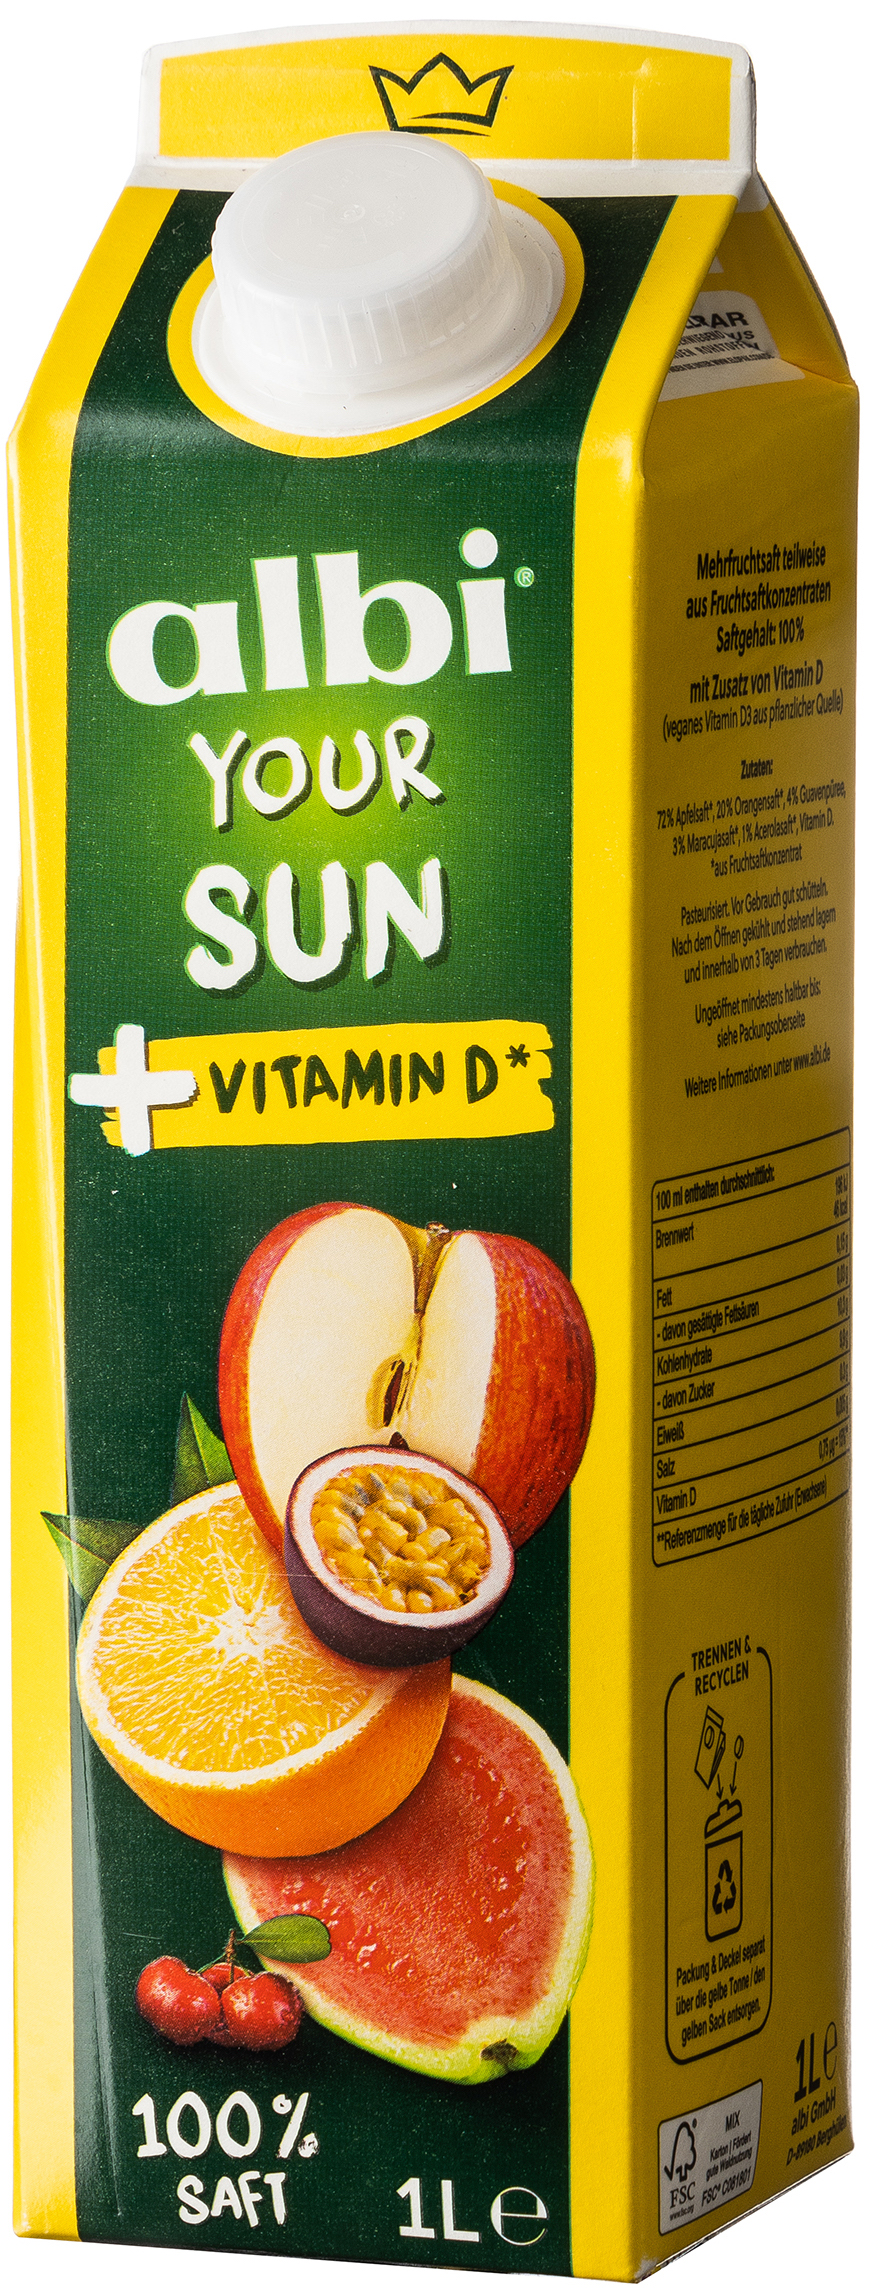 albi your sun - Plus Vitamin D 1,0L